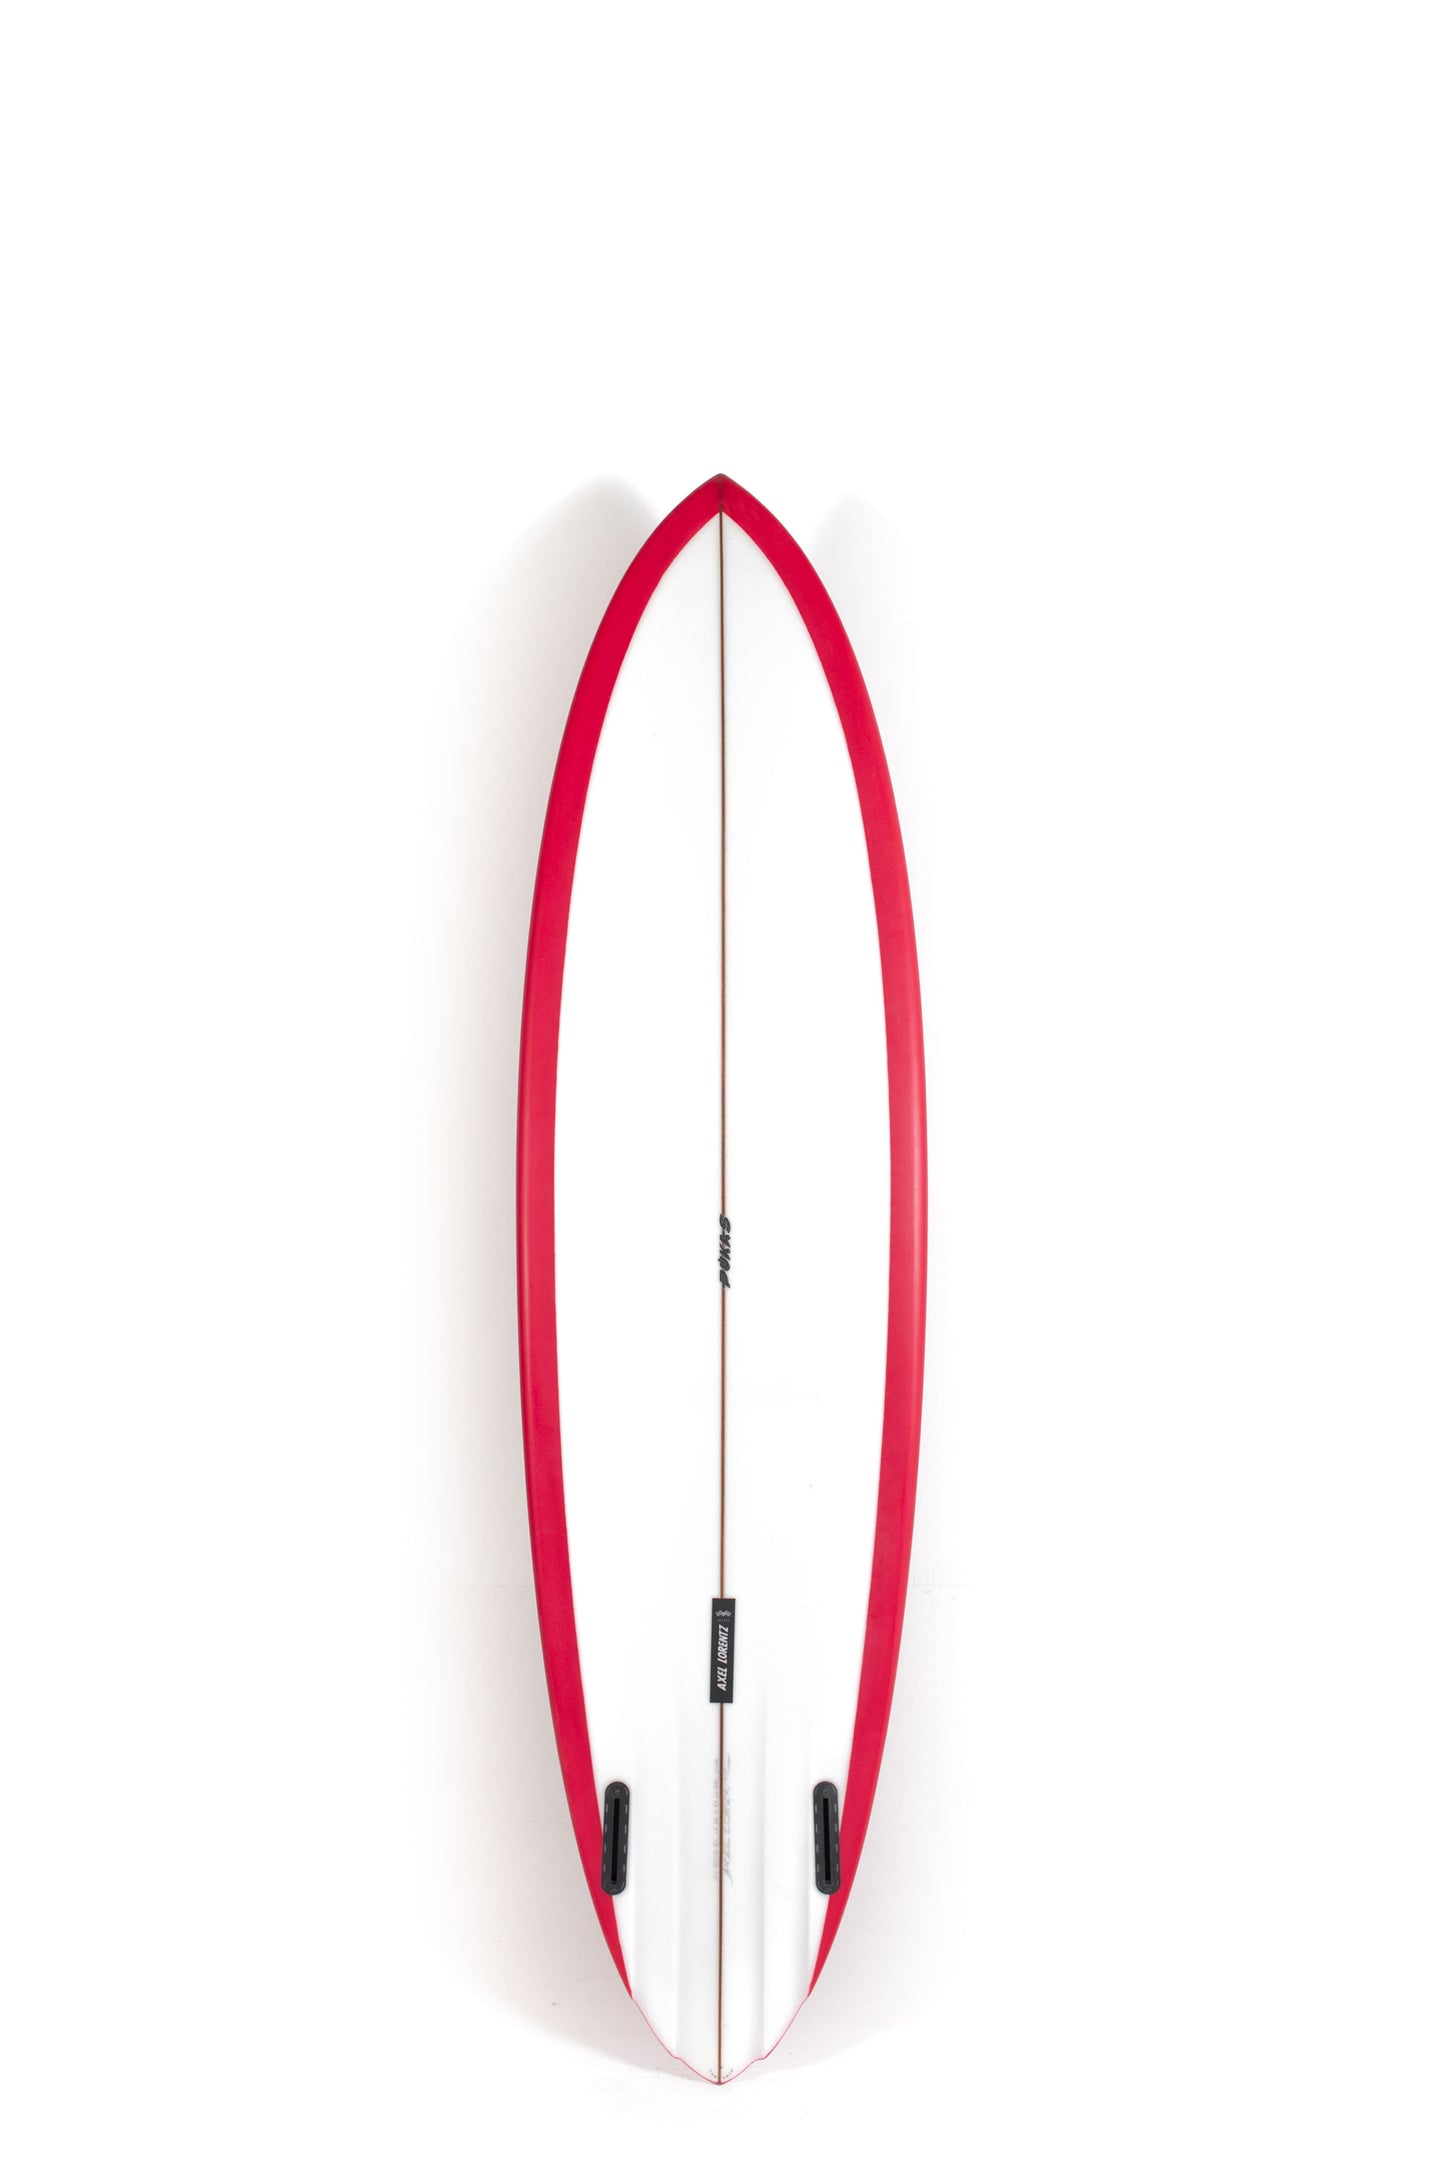 Pukas Surf Shop - Pukas Surfboard - LADY TWIN by Axel Lorentz - 7'2” x 21,38 x 2,97 - 47,86L - AX07604